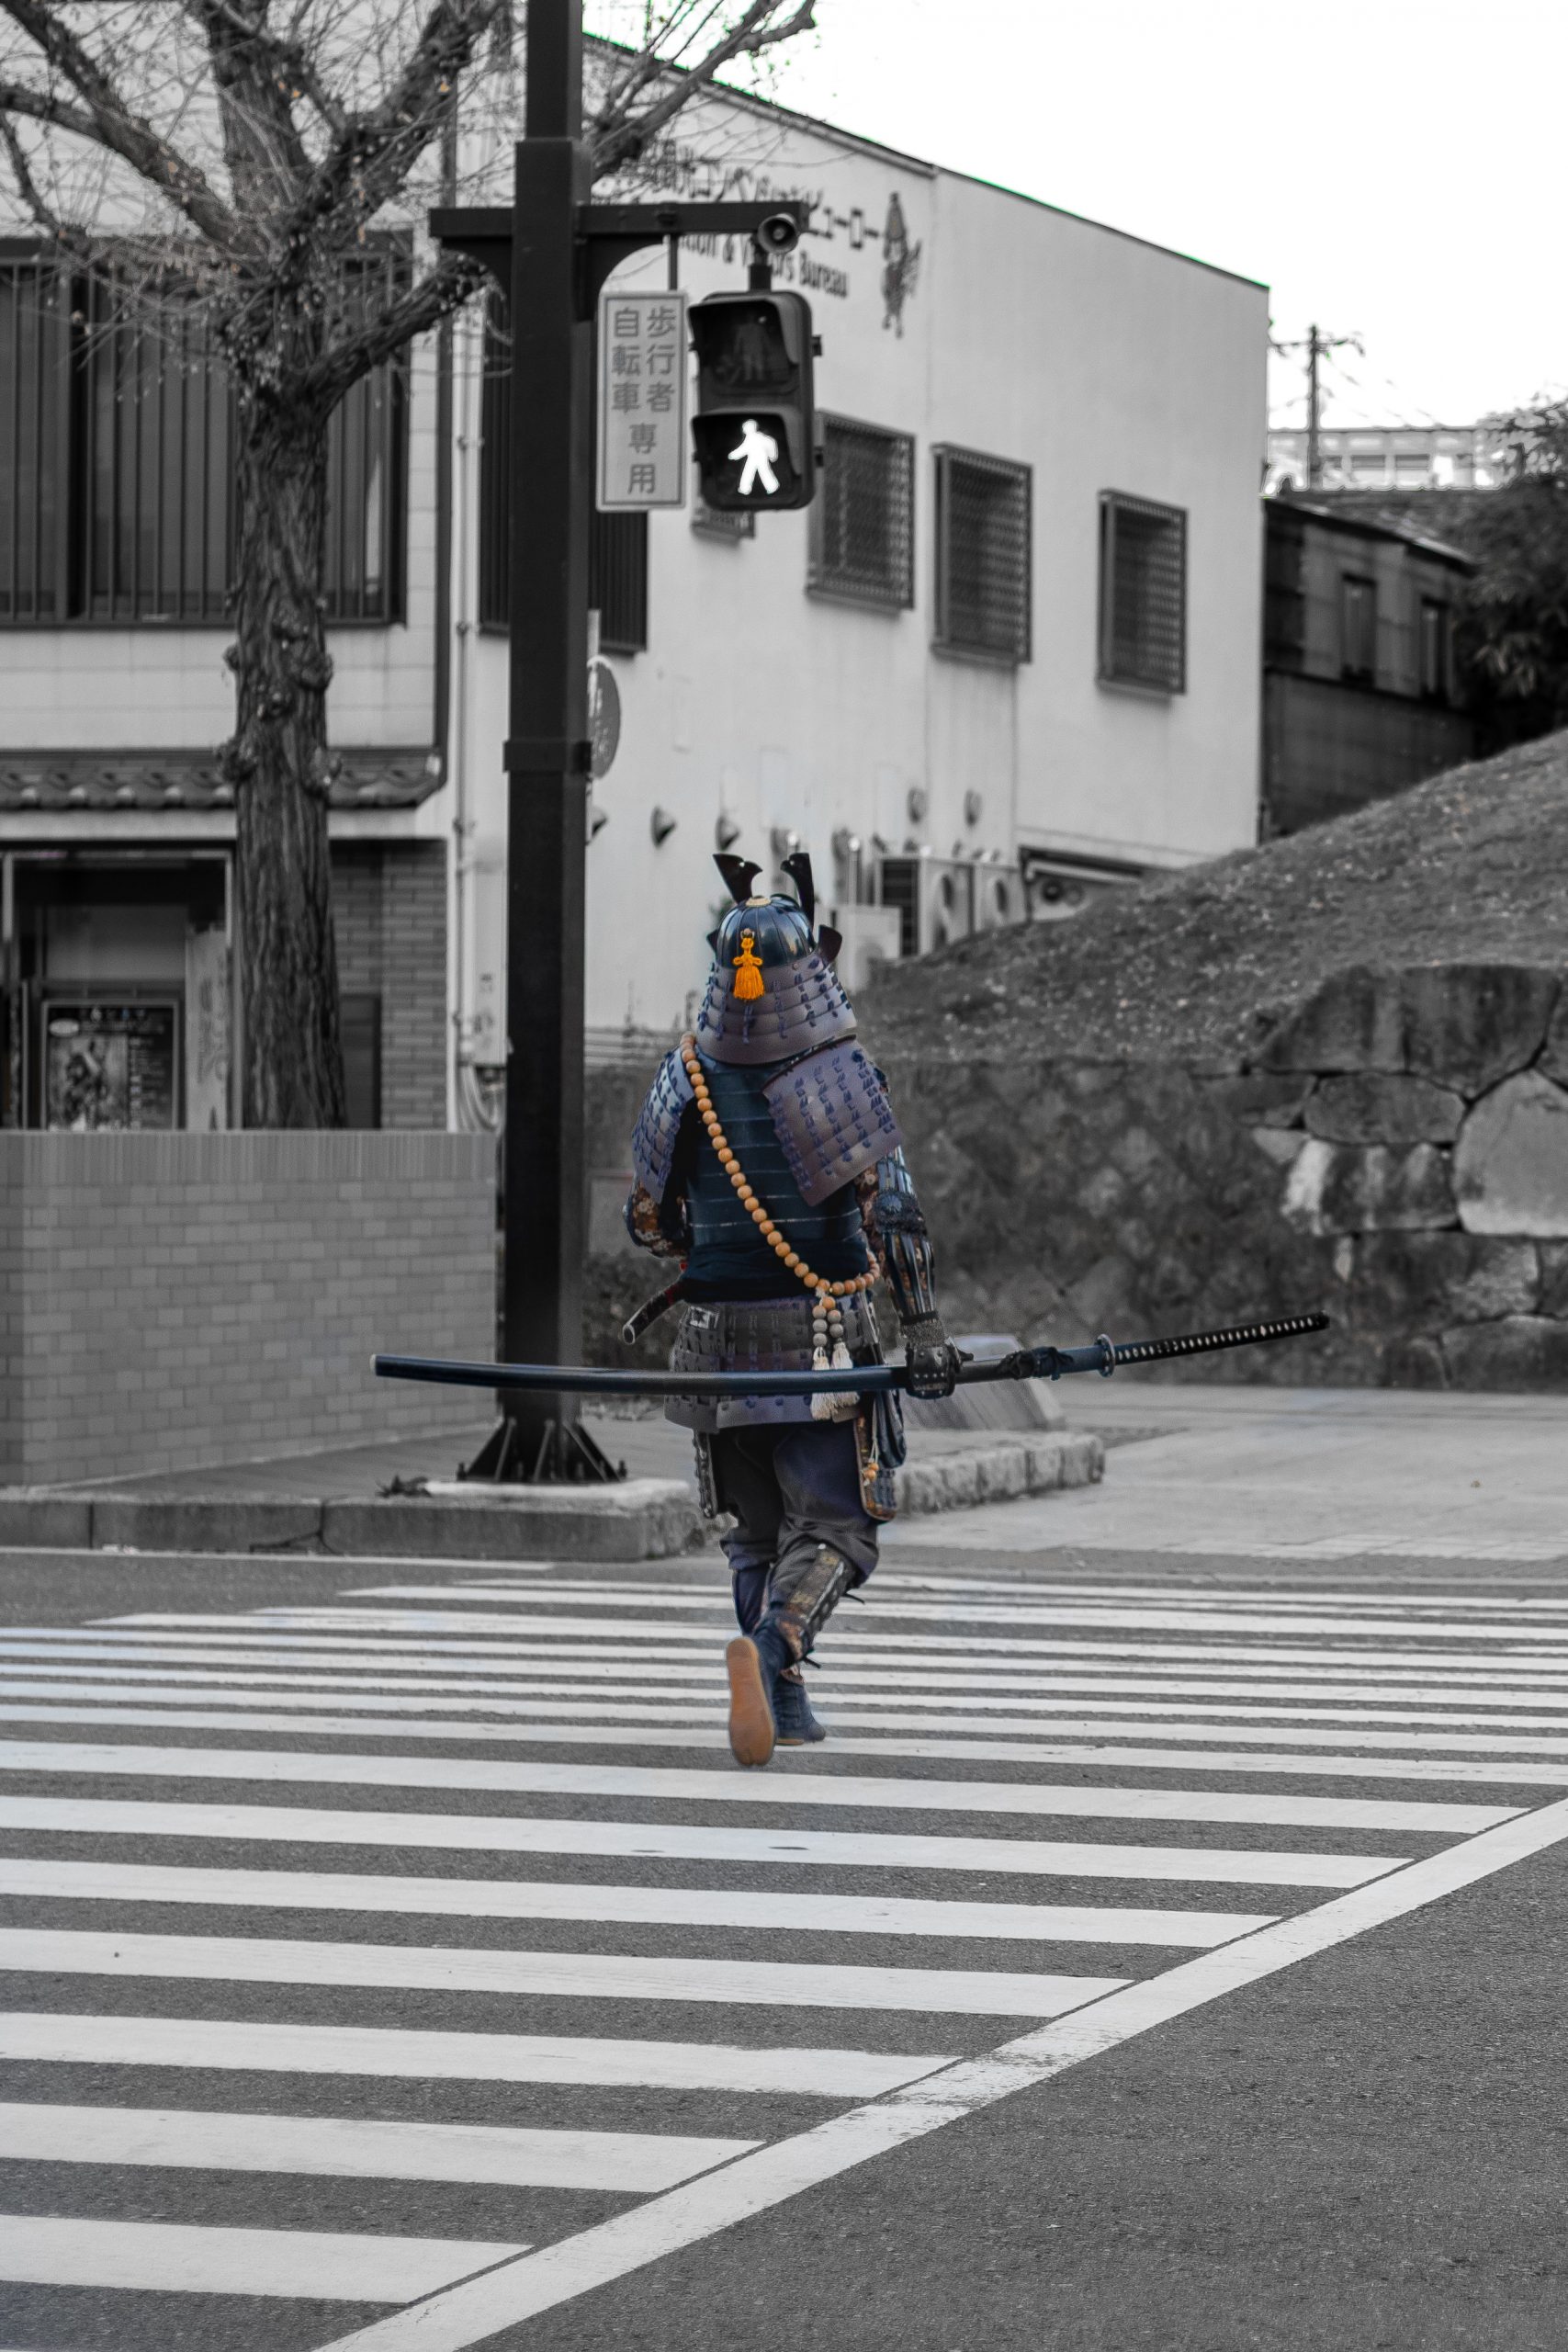 Samurai crossing the street in modern city